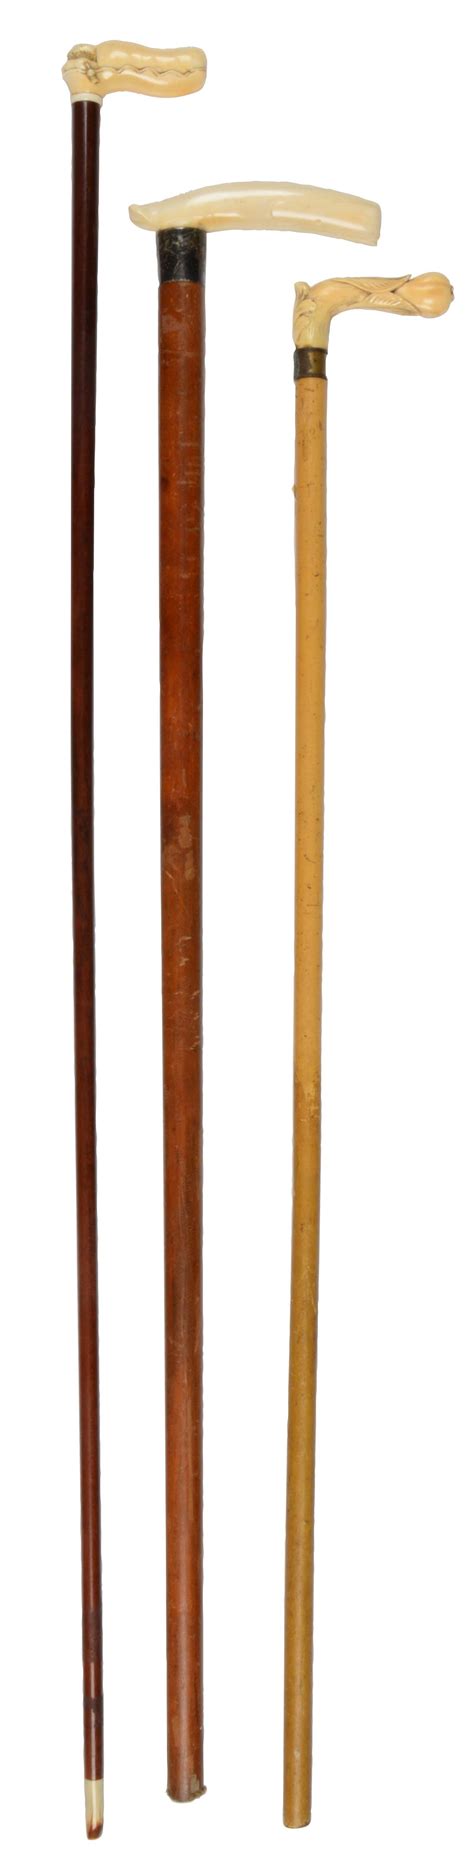 Lot Detail Lot Of 3 Ivory Antique Walking Stick Canes